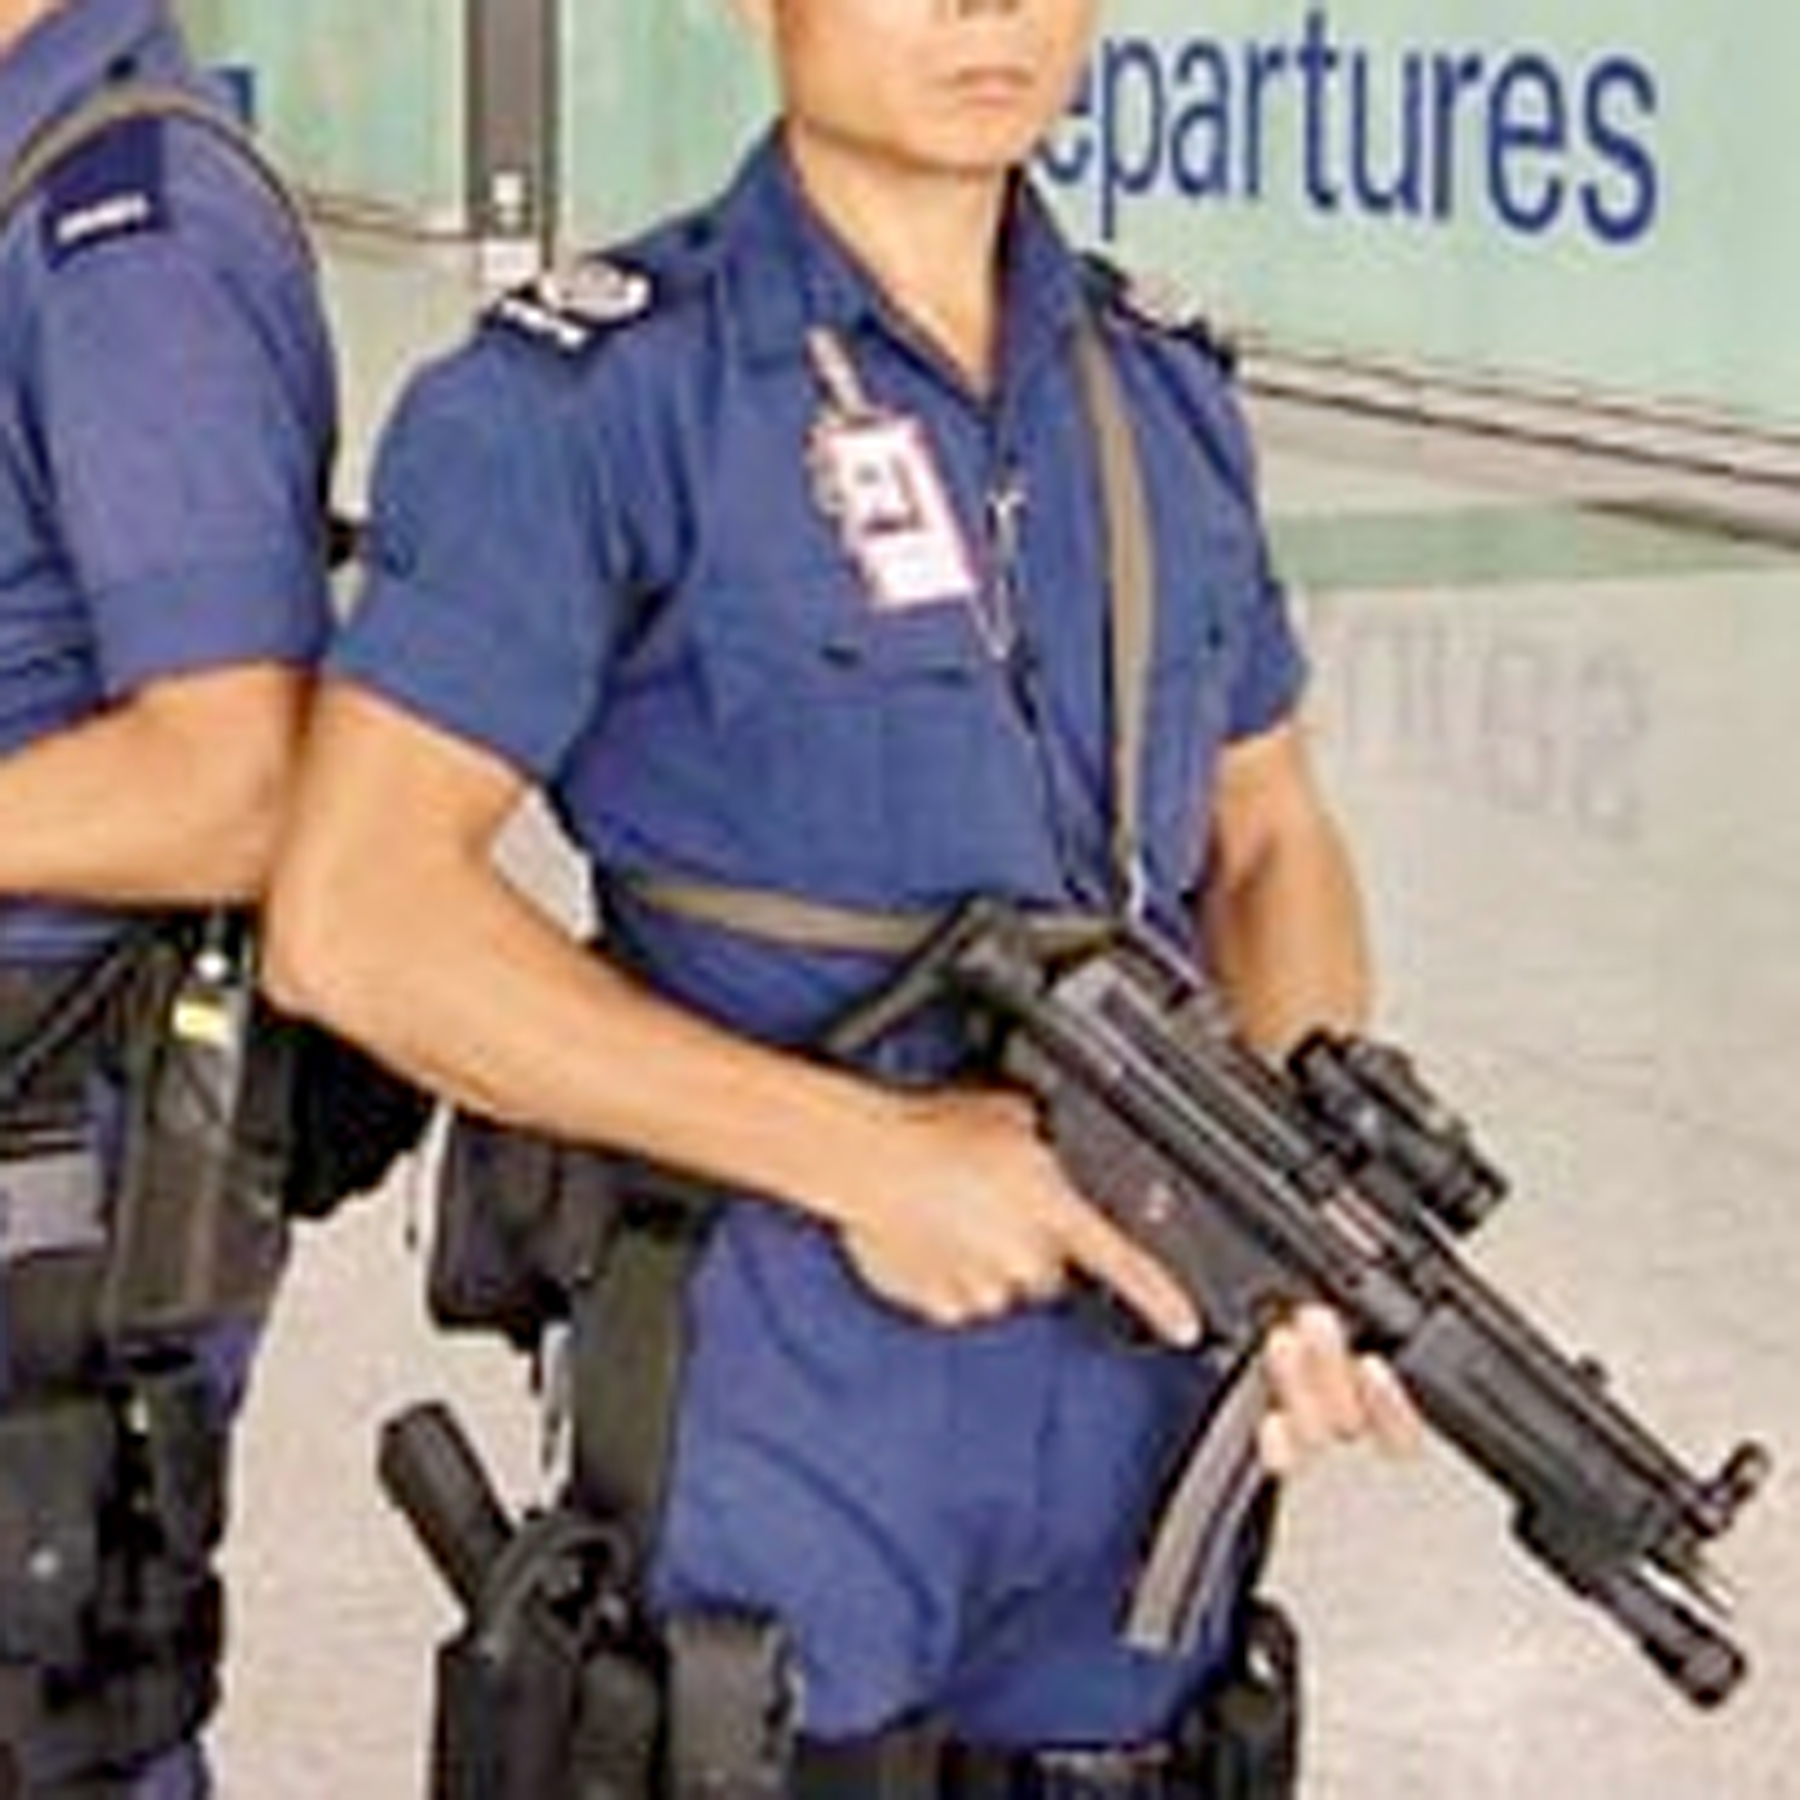 Asians wielding their big weapons at Hong Kong airport!